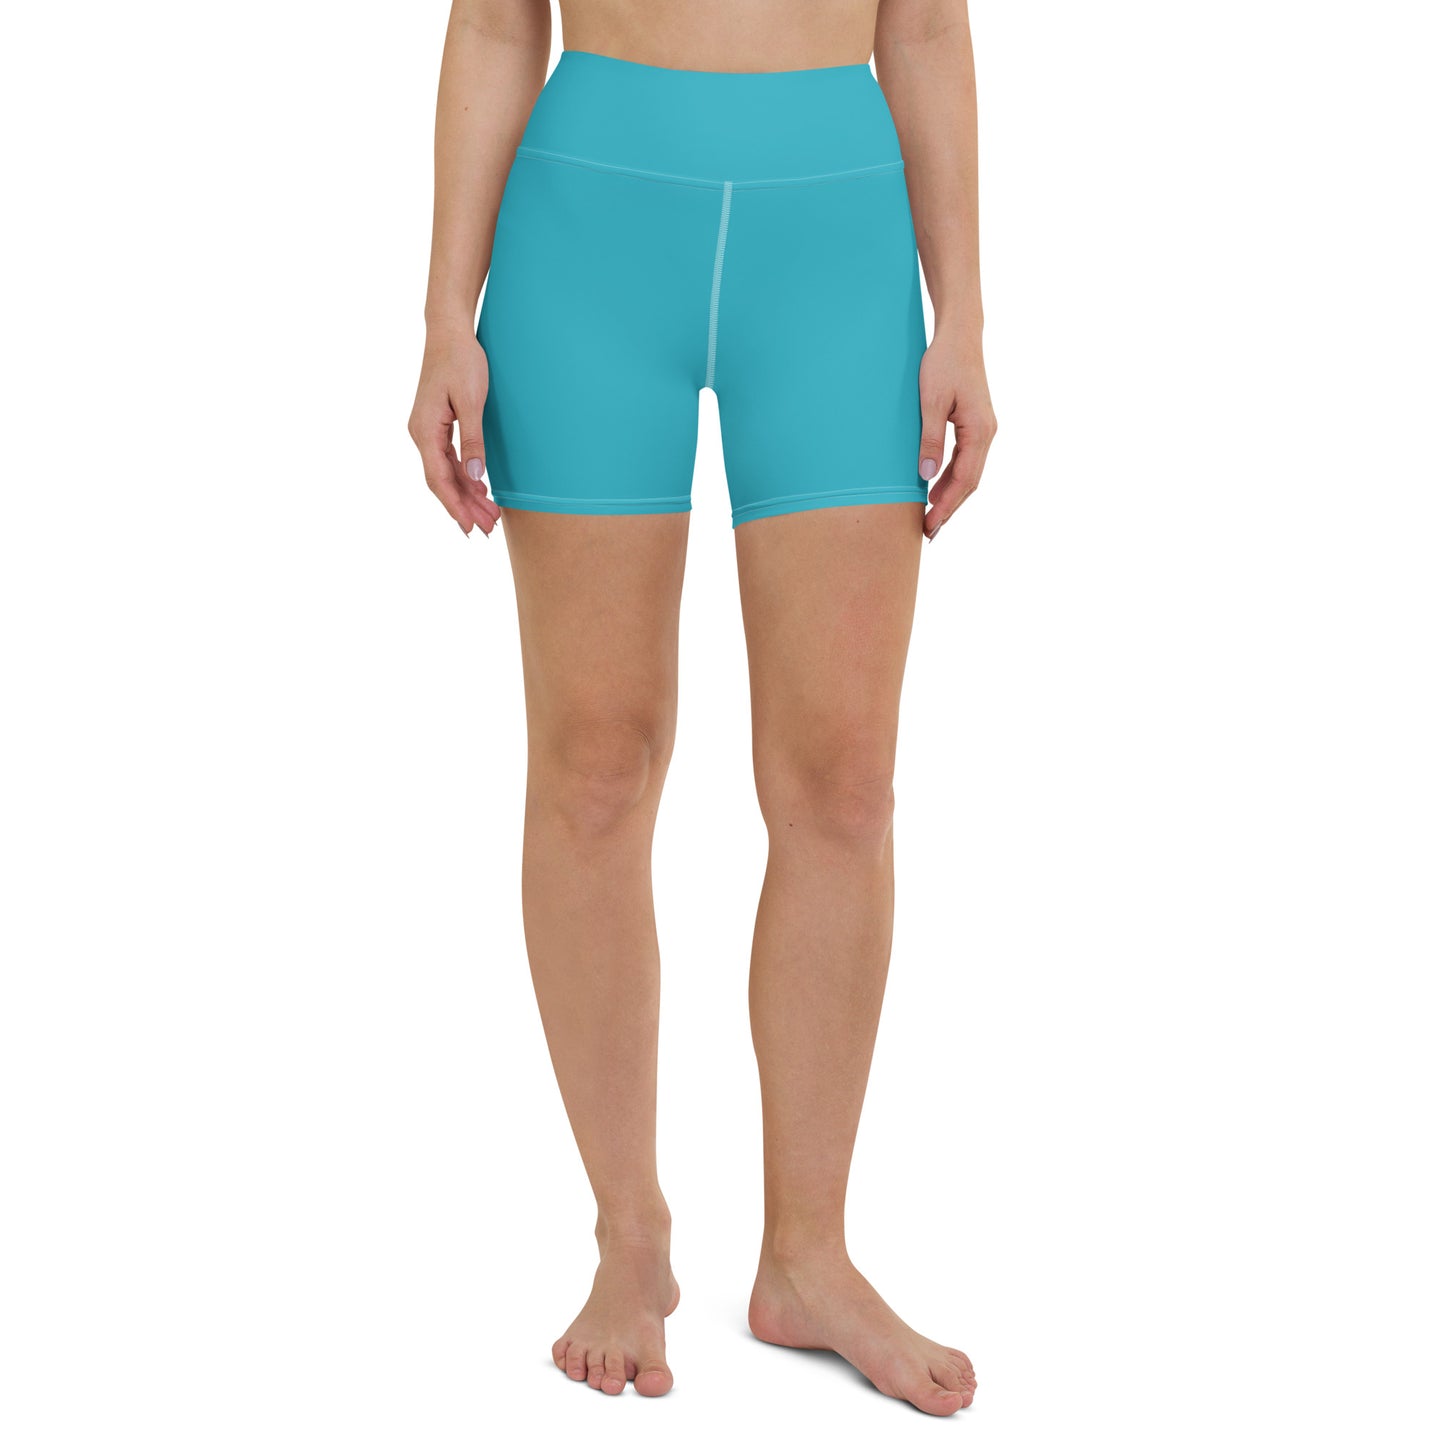 Ojos Solid Teal High Waist Yoga Shorts / Bike Shorts with Inside Pocket